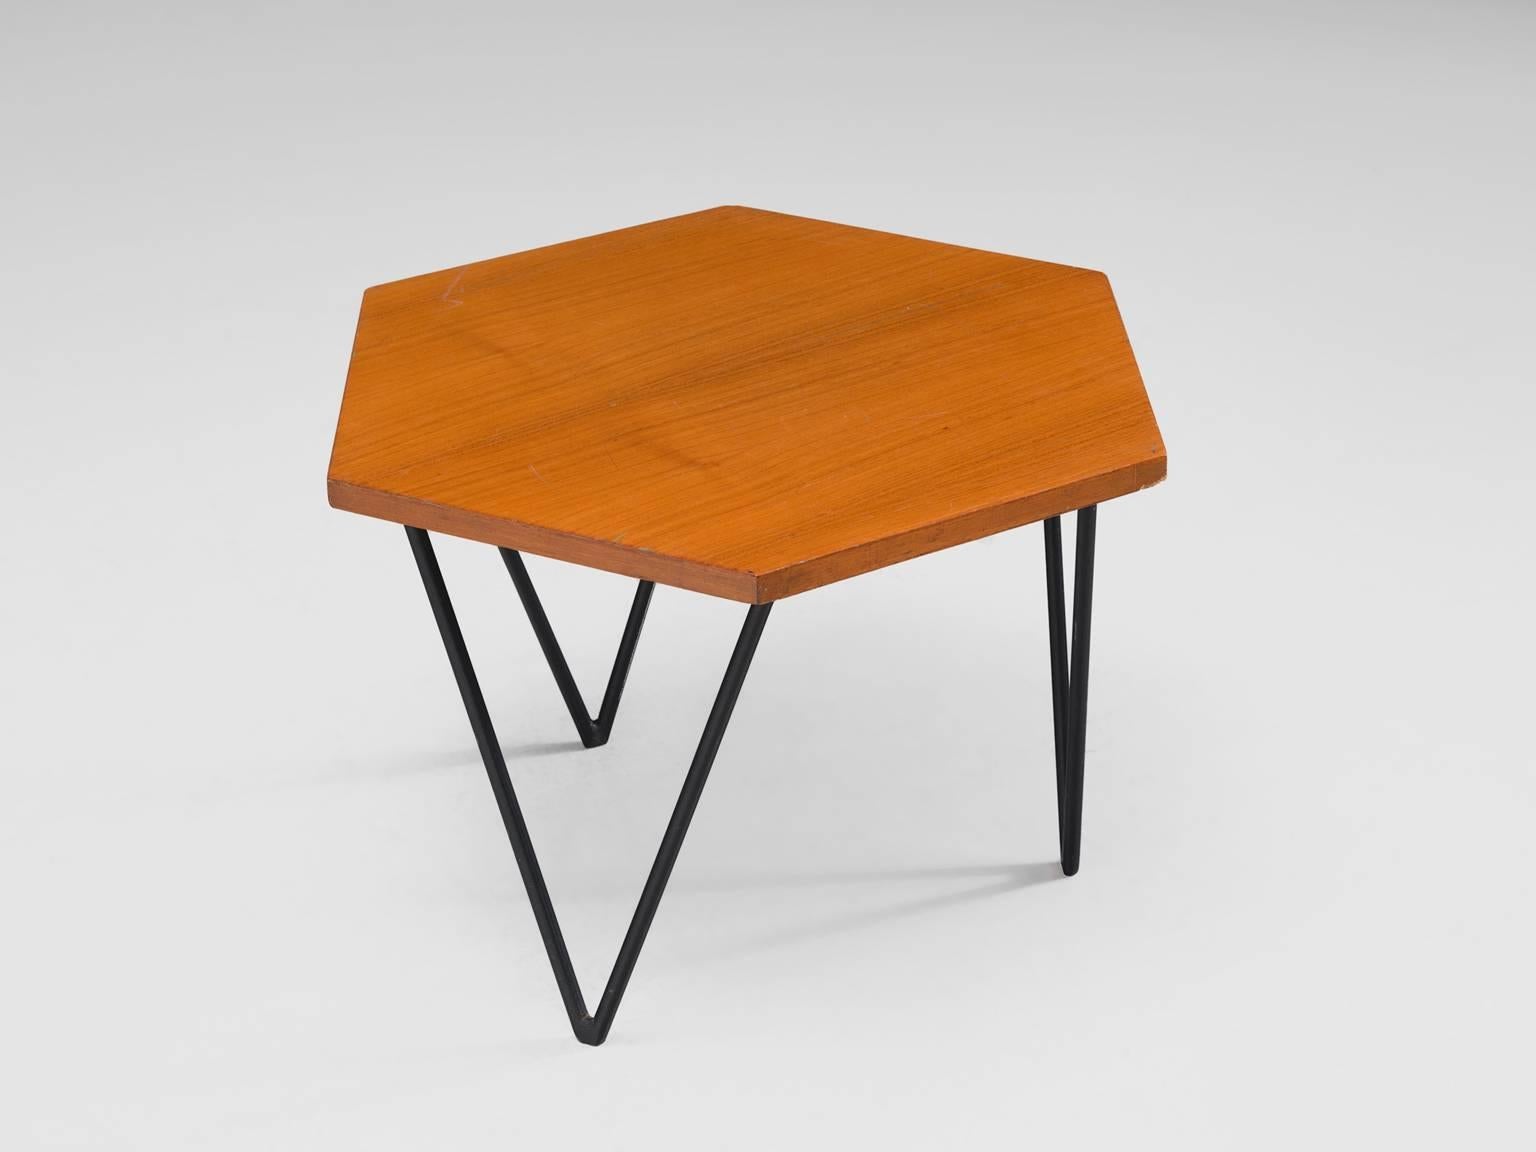 Italian Gio Ponti for ISA Segmented Side Table